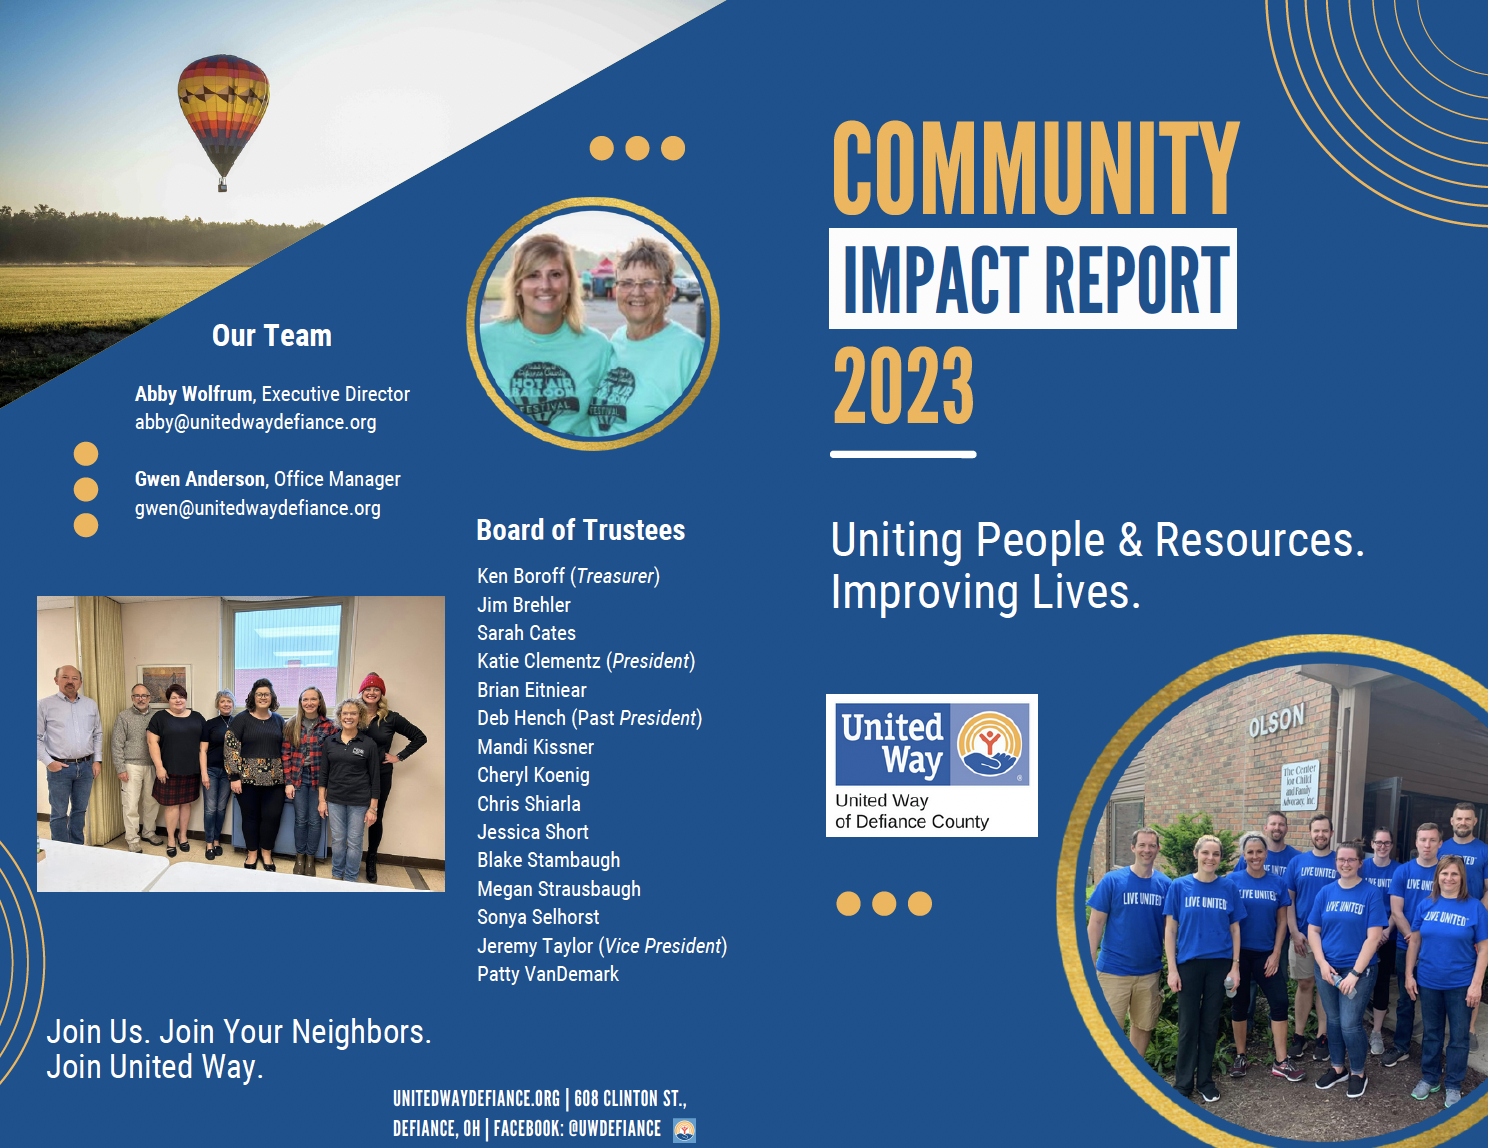 2023 Community Impact Report